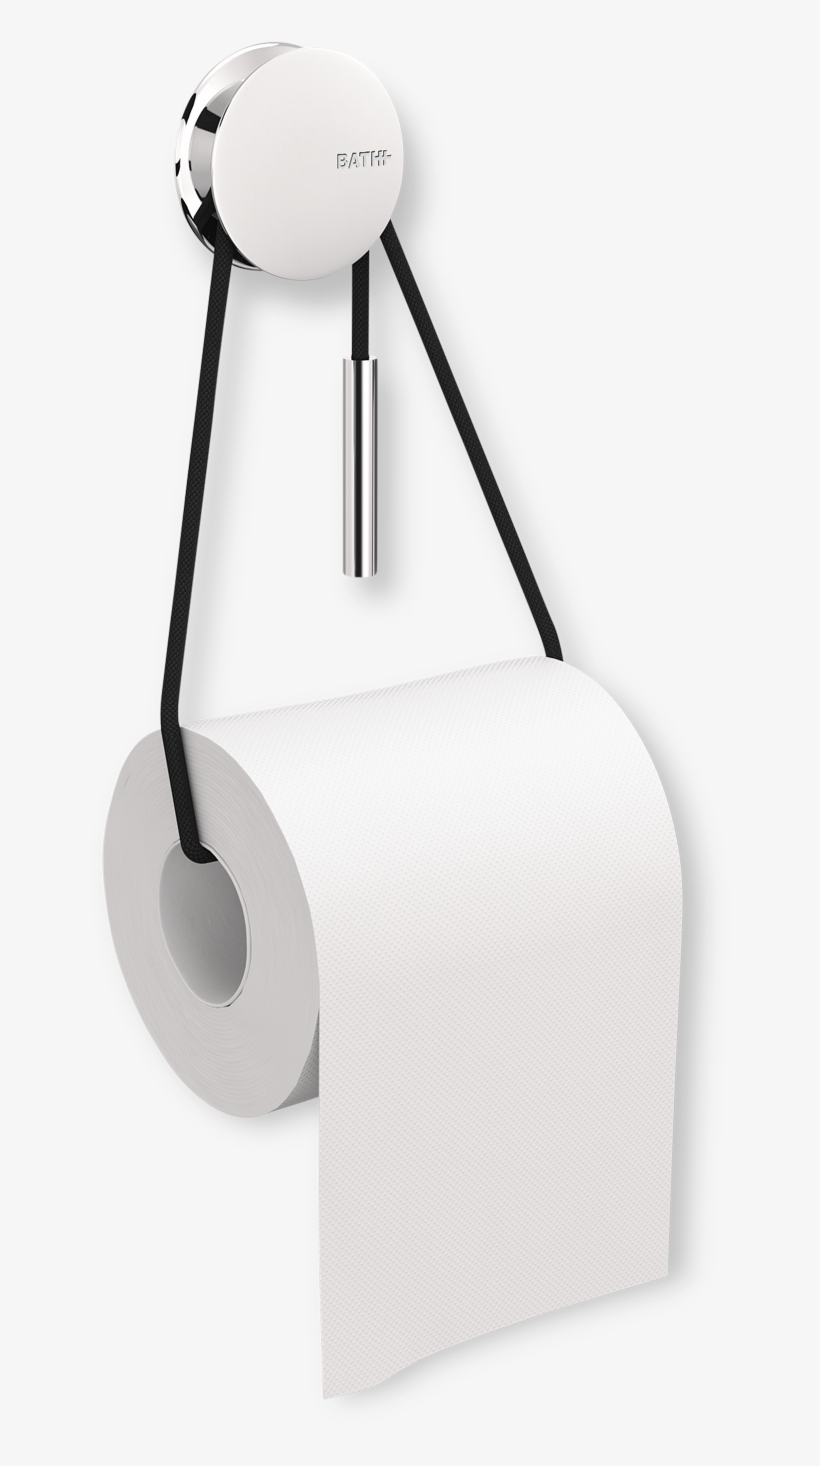 Diabolo Toilet Paper Holder, Chrome-0 - Toilet Roll Holder, transparent png #1076256